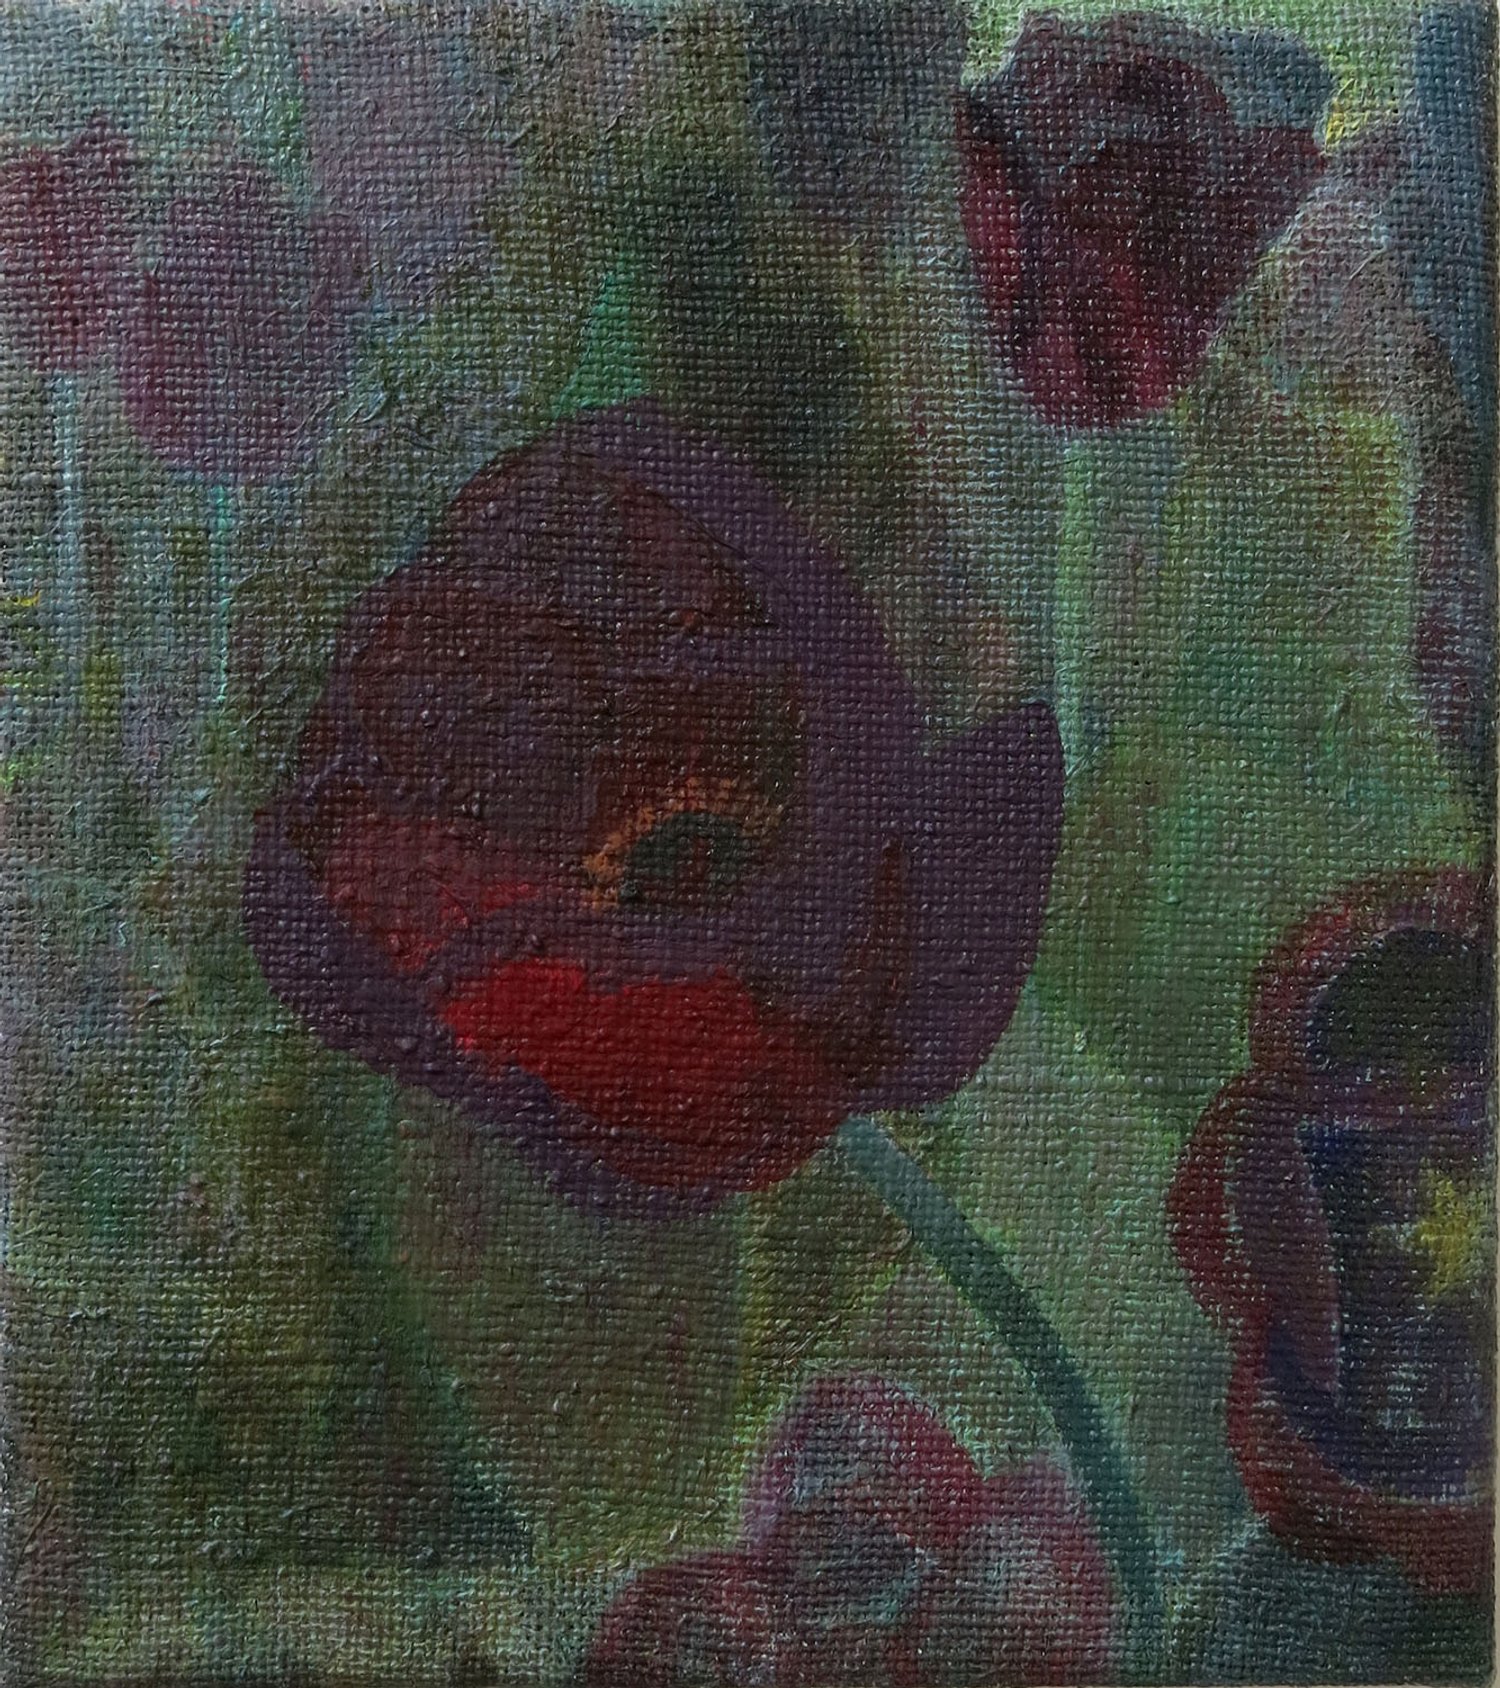   Tulips    2023, oil on jute, 23 x 20cm  